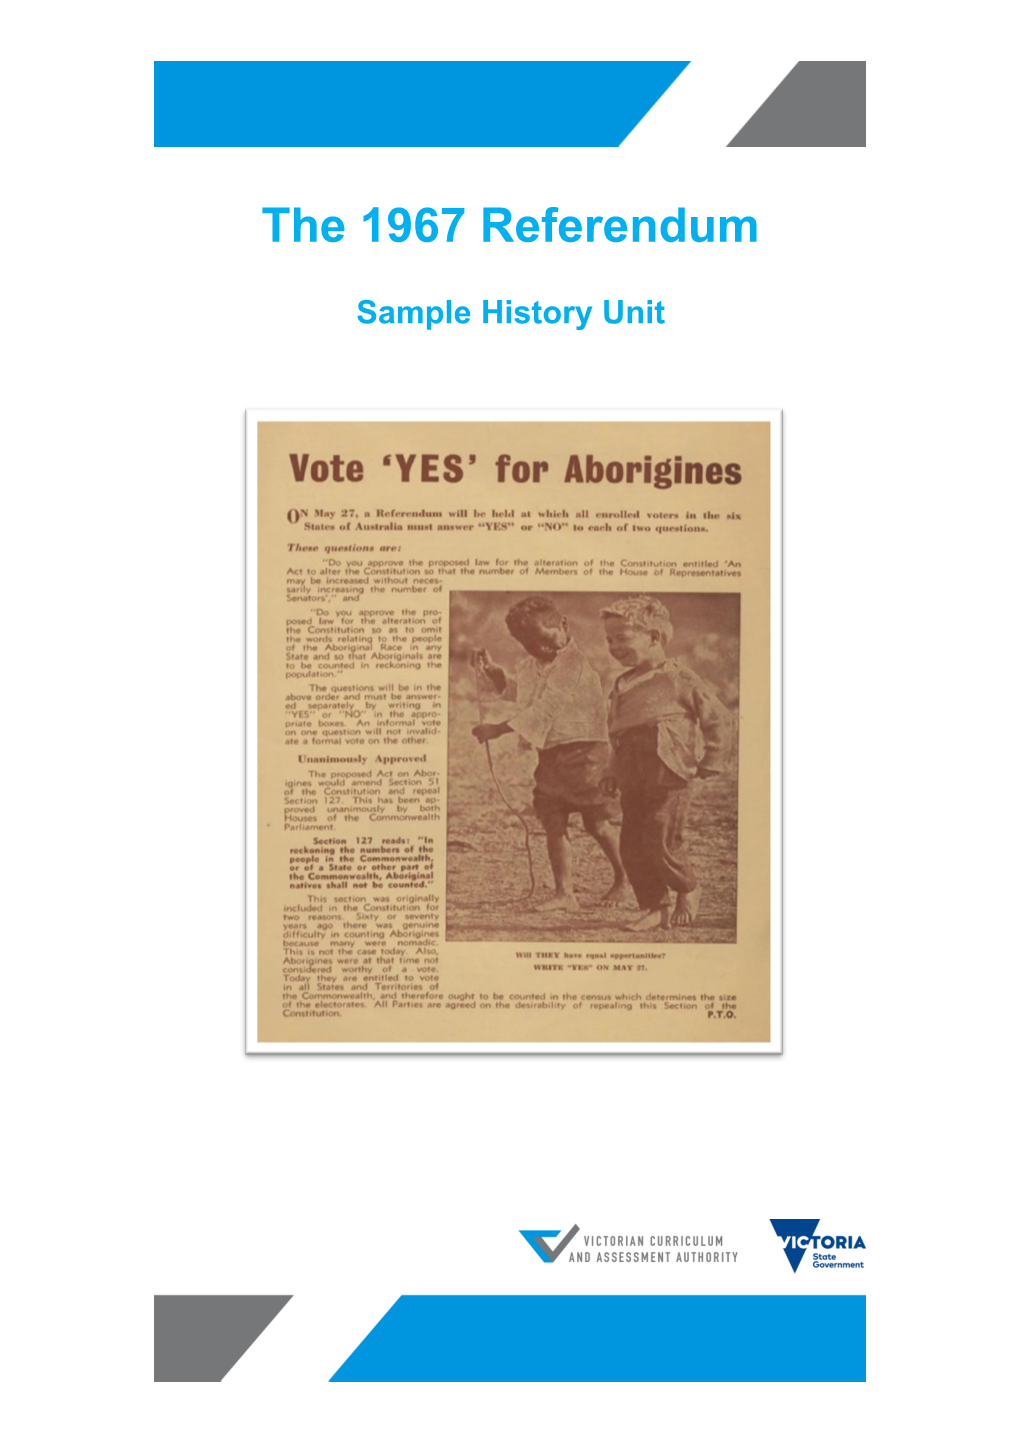 The 1967 Referendum: Sample History Unit